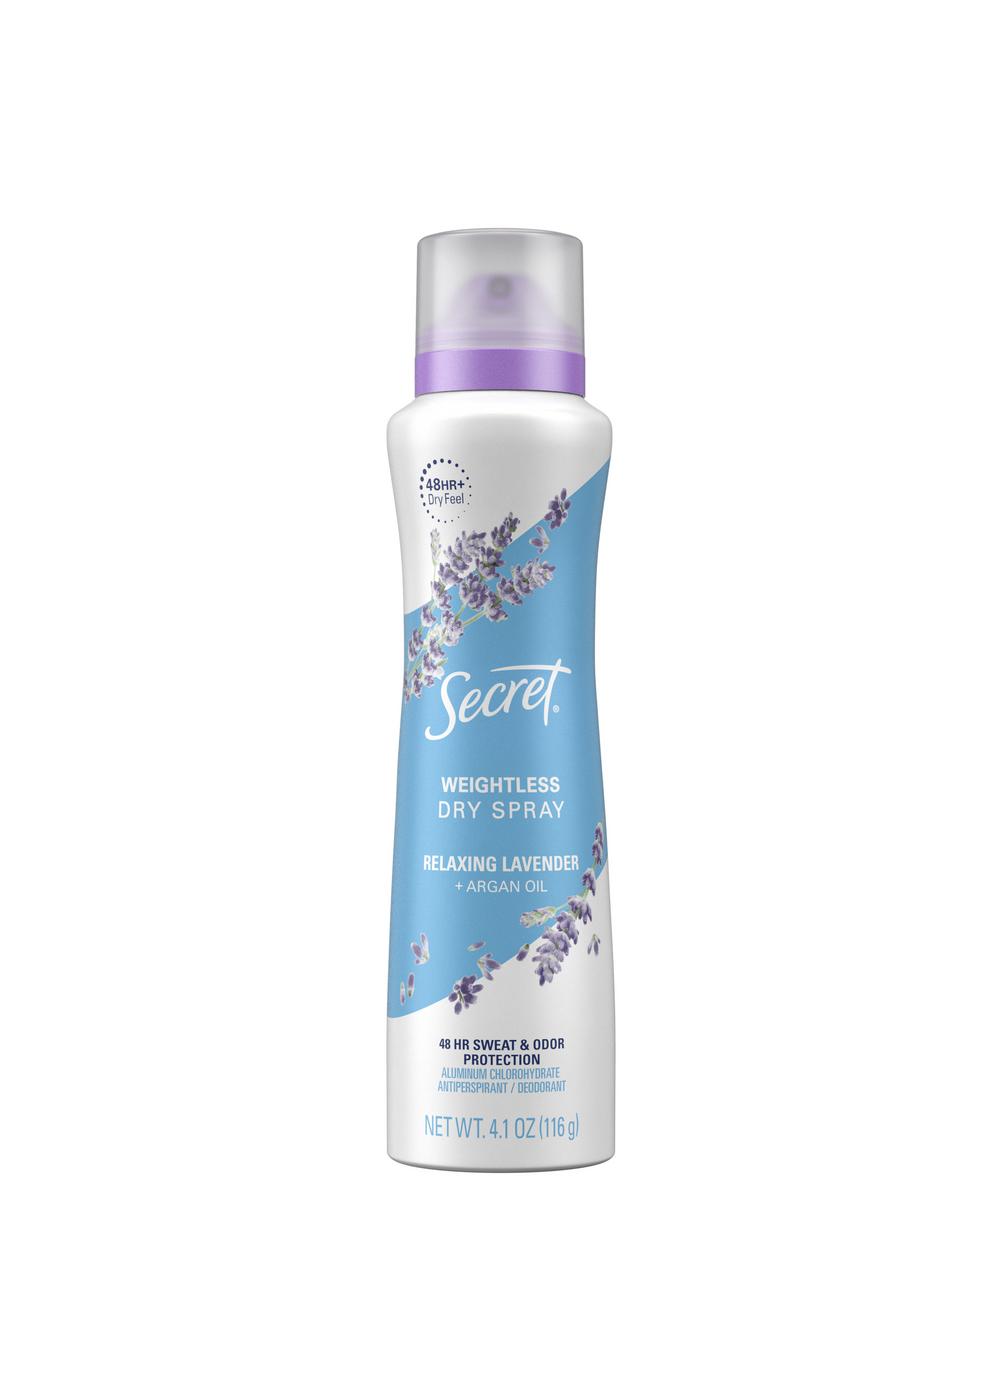 Secret Antiperspirant Deodorant Dry Spray - Relaxing Lavender; image 1 of 8